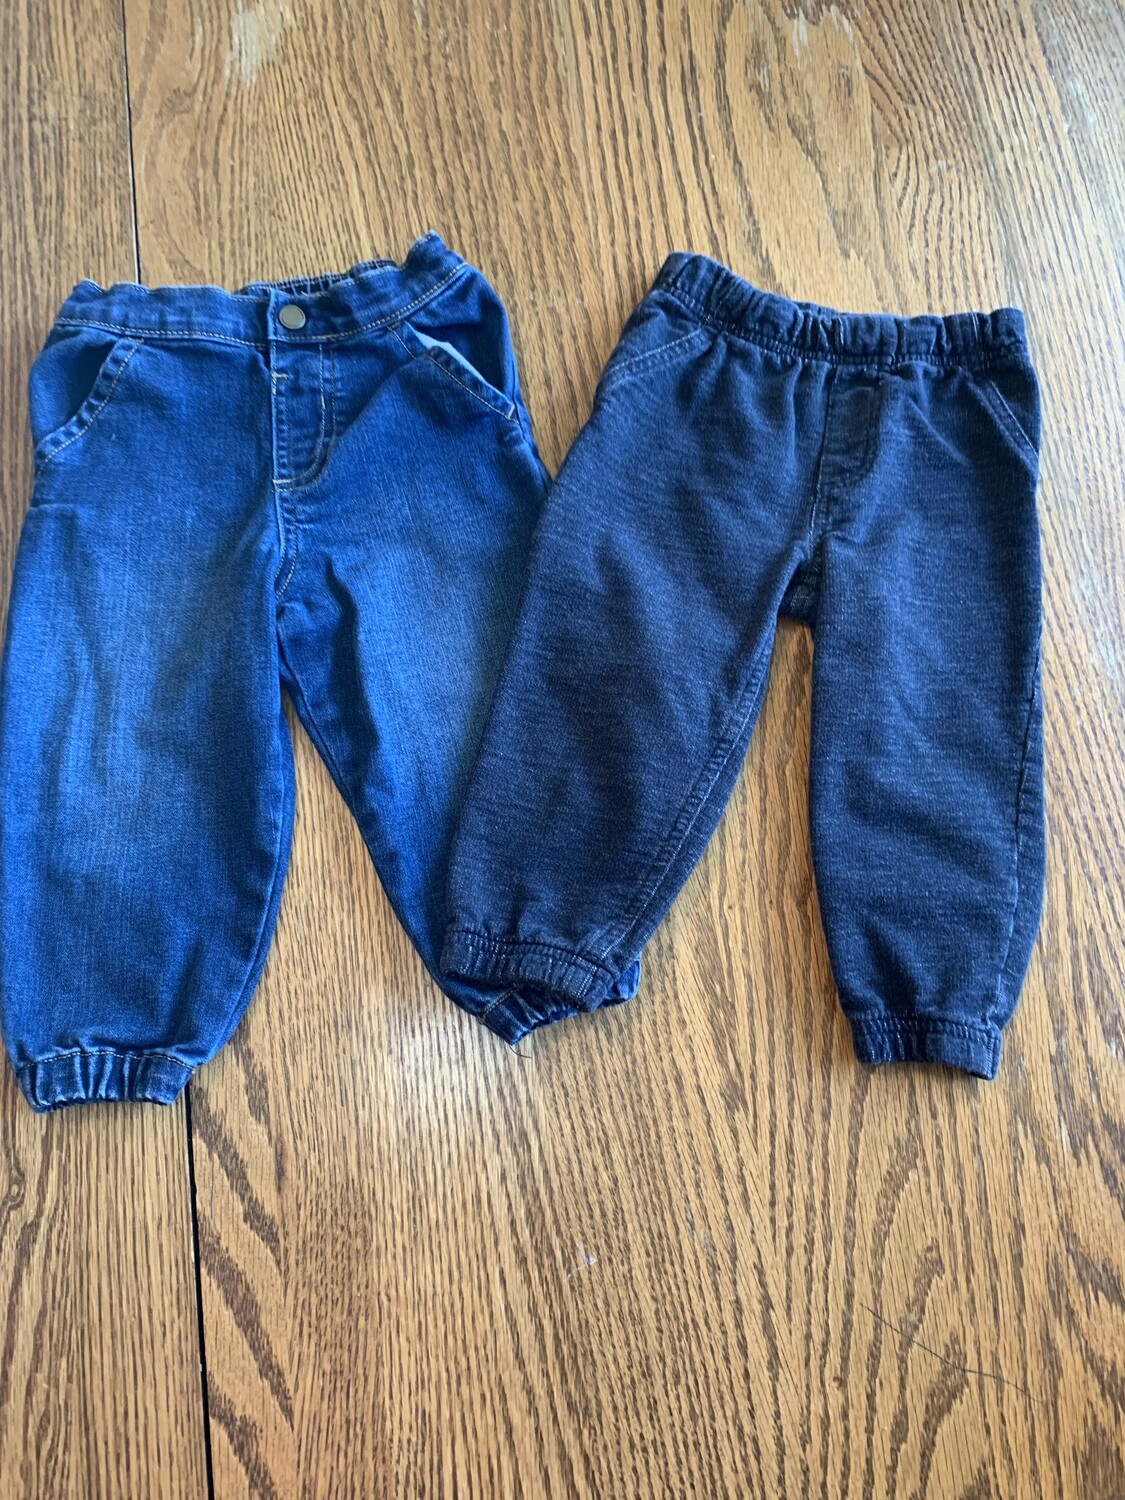 2 pants  jeans, jegging